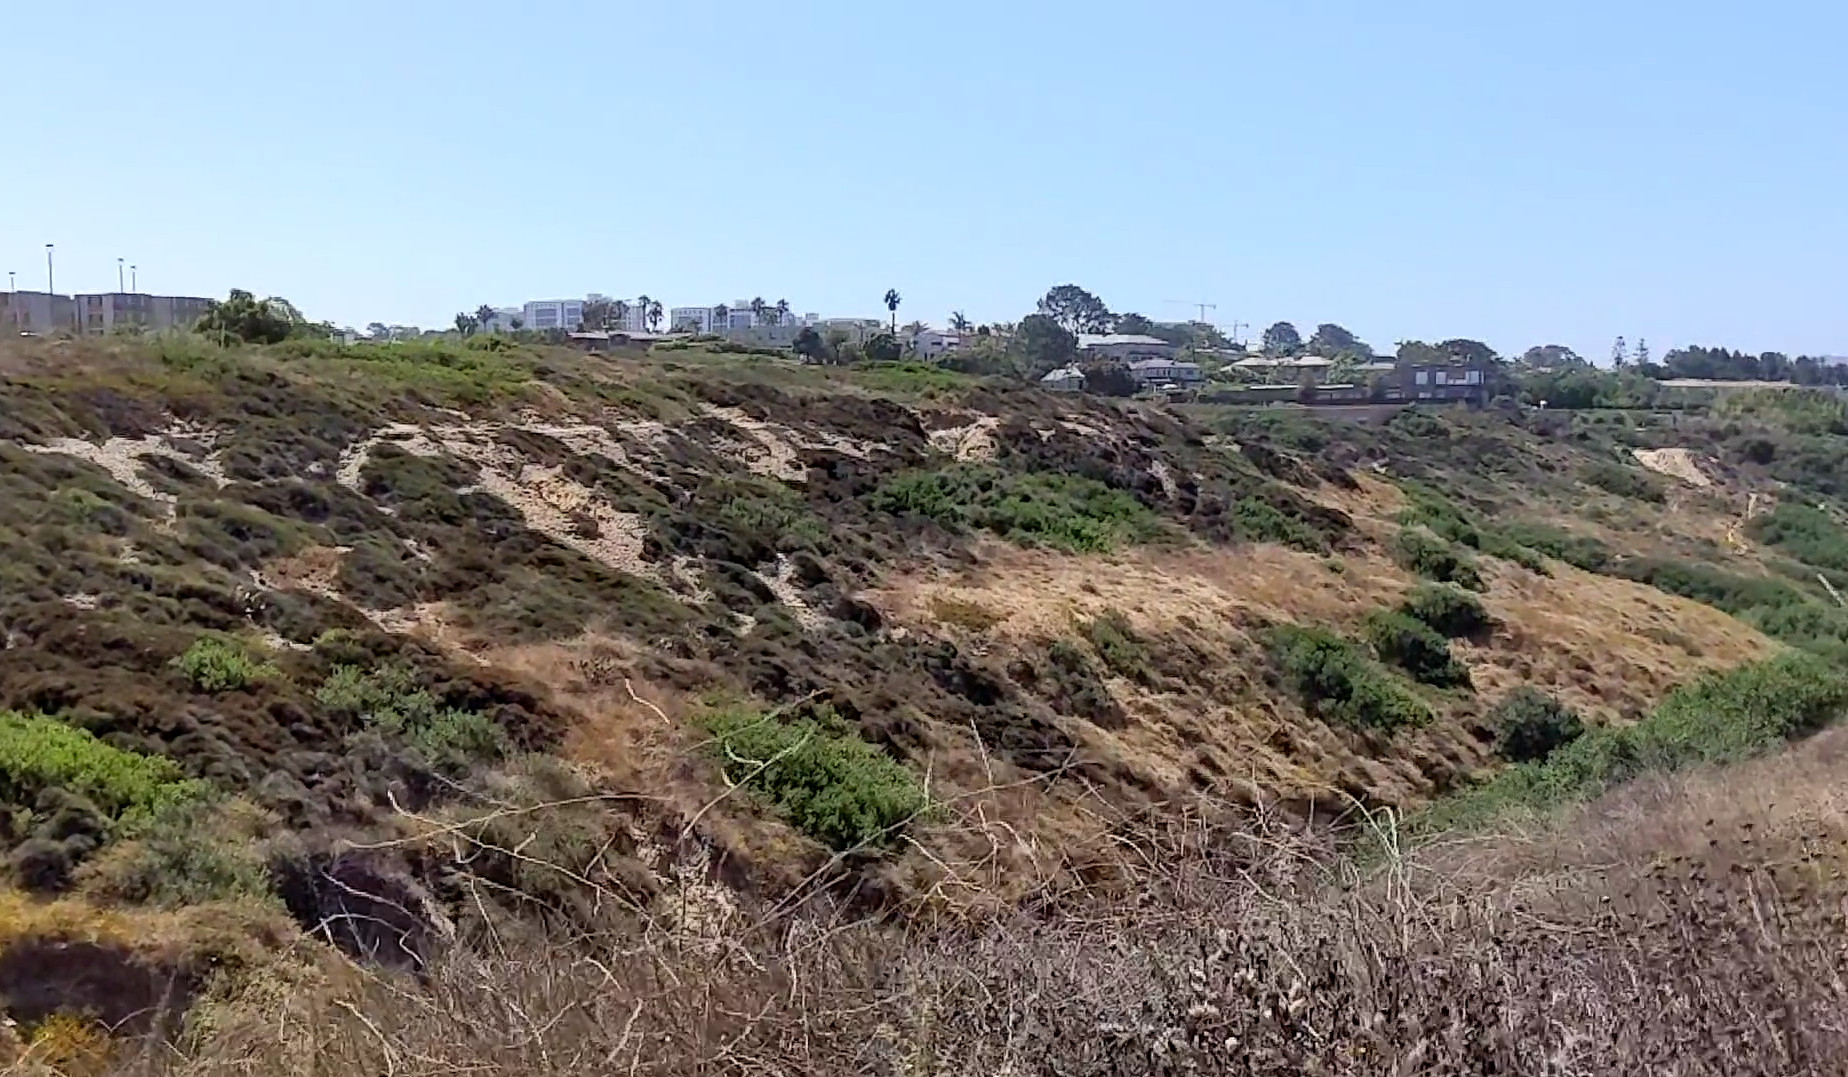 Grassy brown hills next to a La Jolla beach